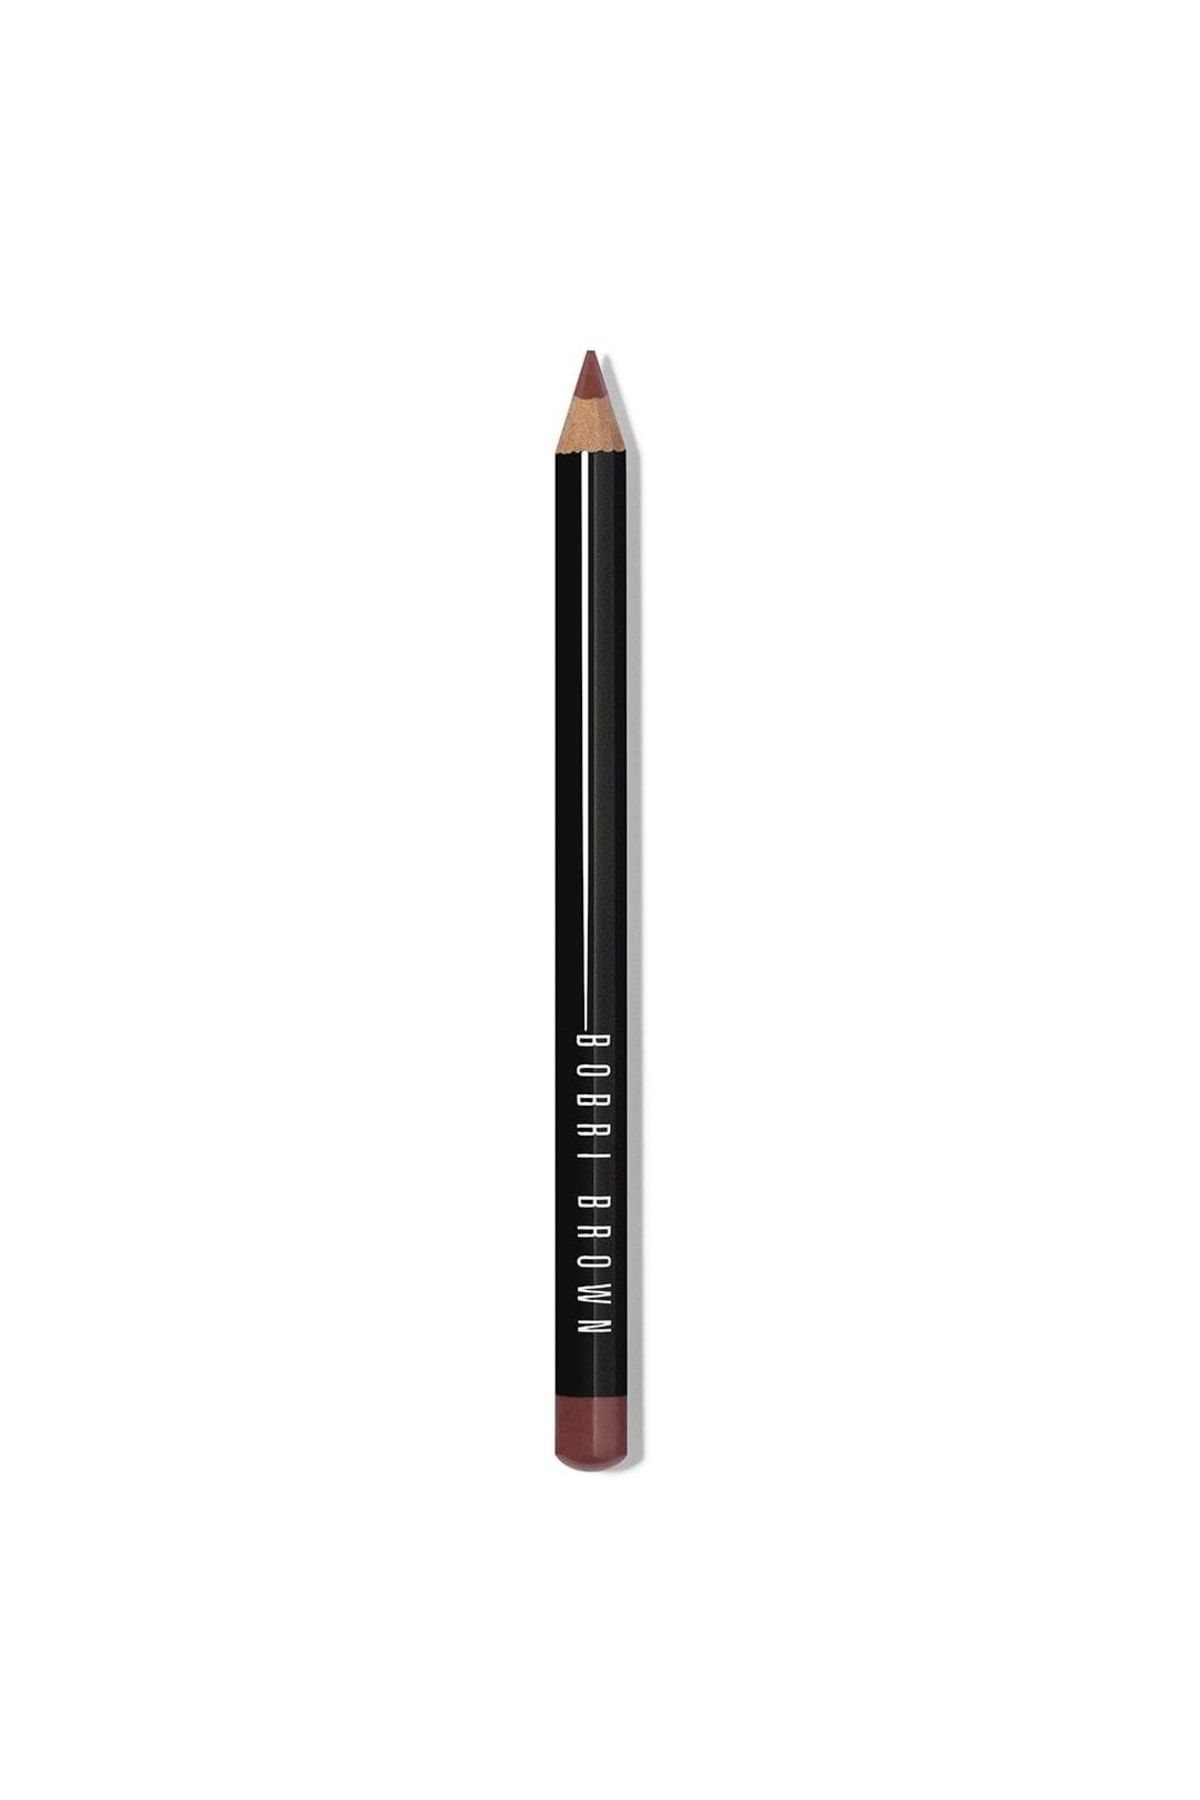 Bobbi Brown Lip Pencil / Dudak Kalemi - Rum Raisin 716170141381